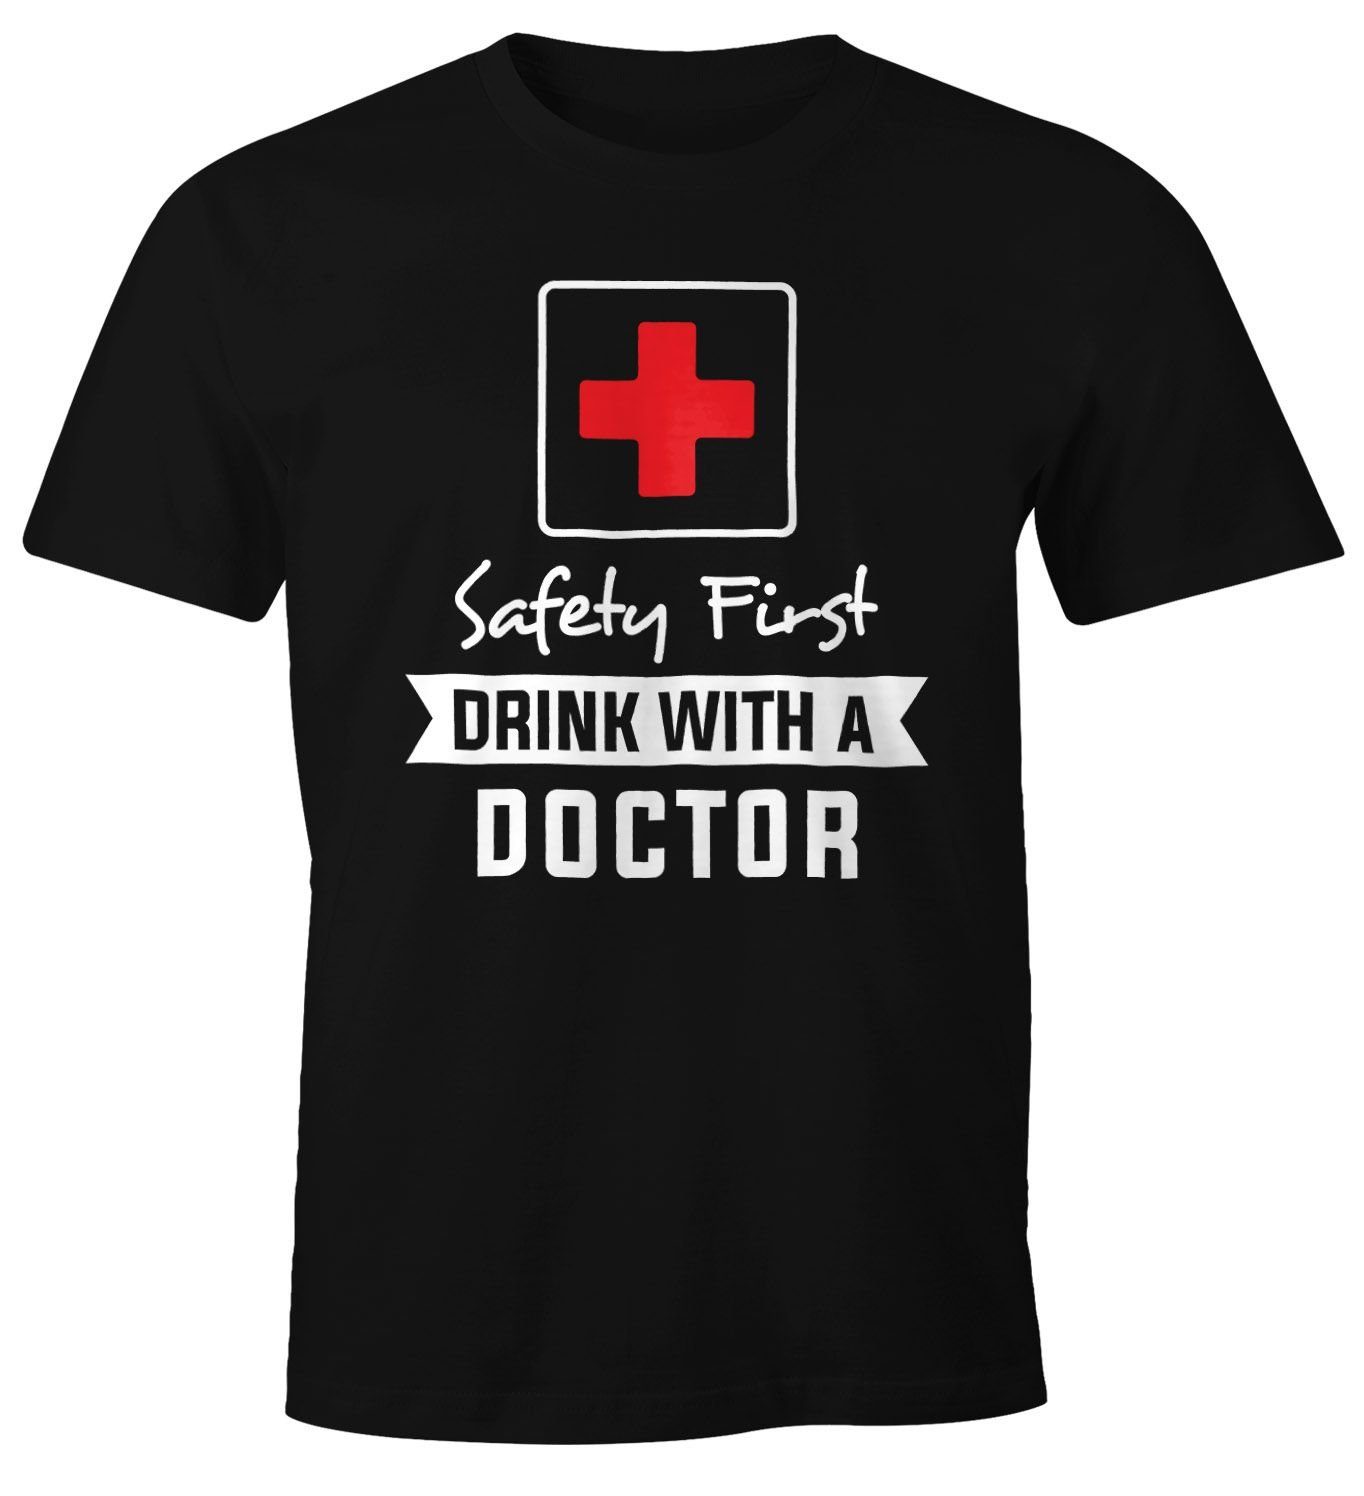 MoonWorks Print-Shirt Herren T-Shirt Safety First drink with a doctor Fun-Shirt Party-Shirt Moonworks® mit Print schwarz